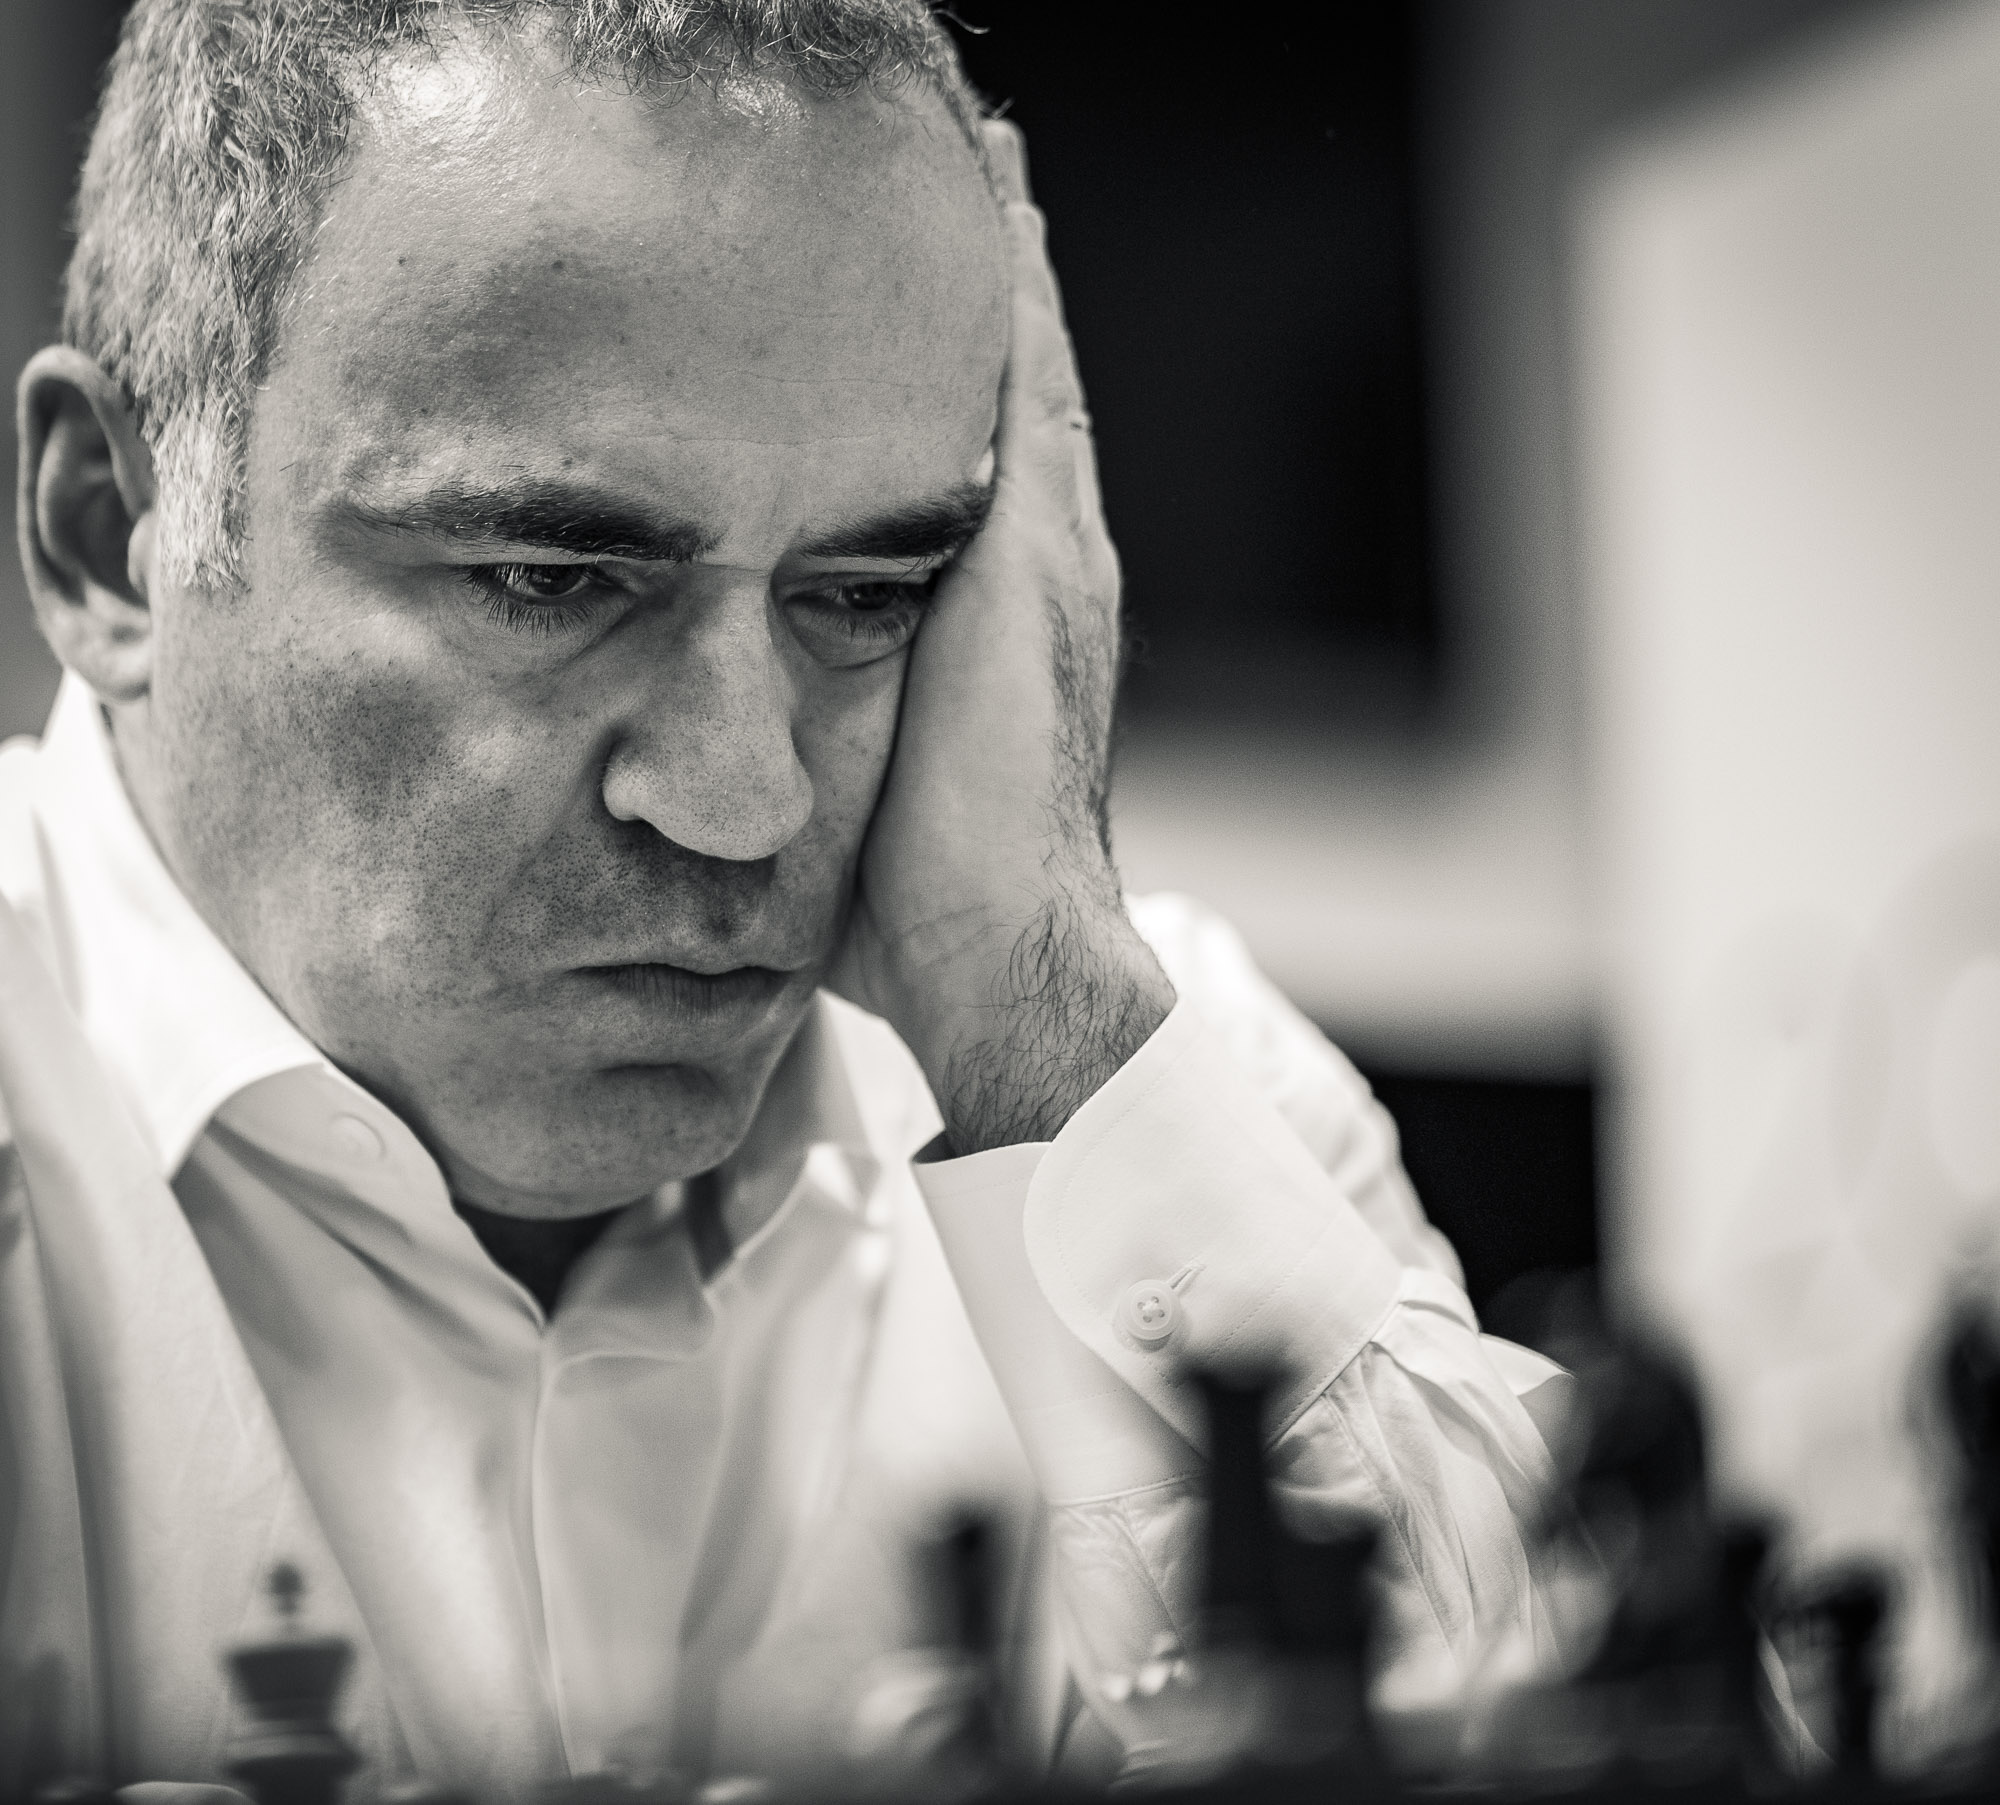 Kasparov - Karpov World Championship Match 1984 - Chessentials